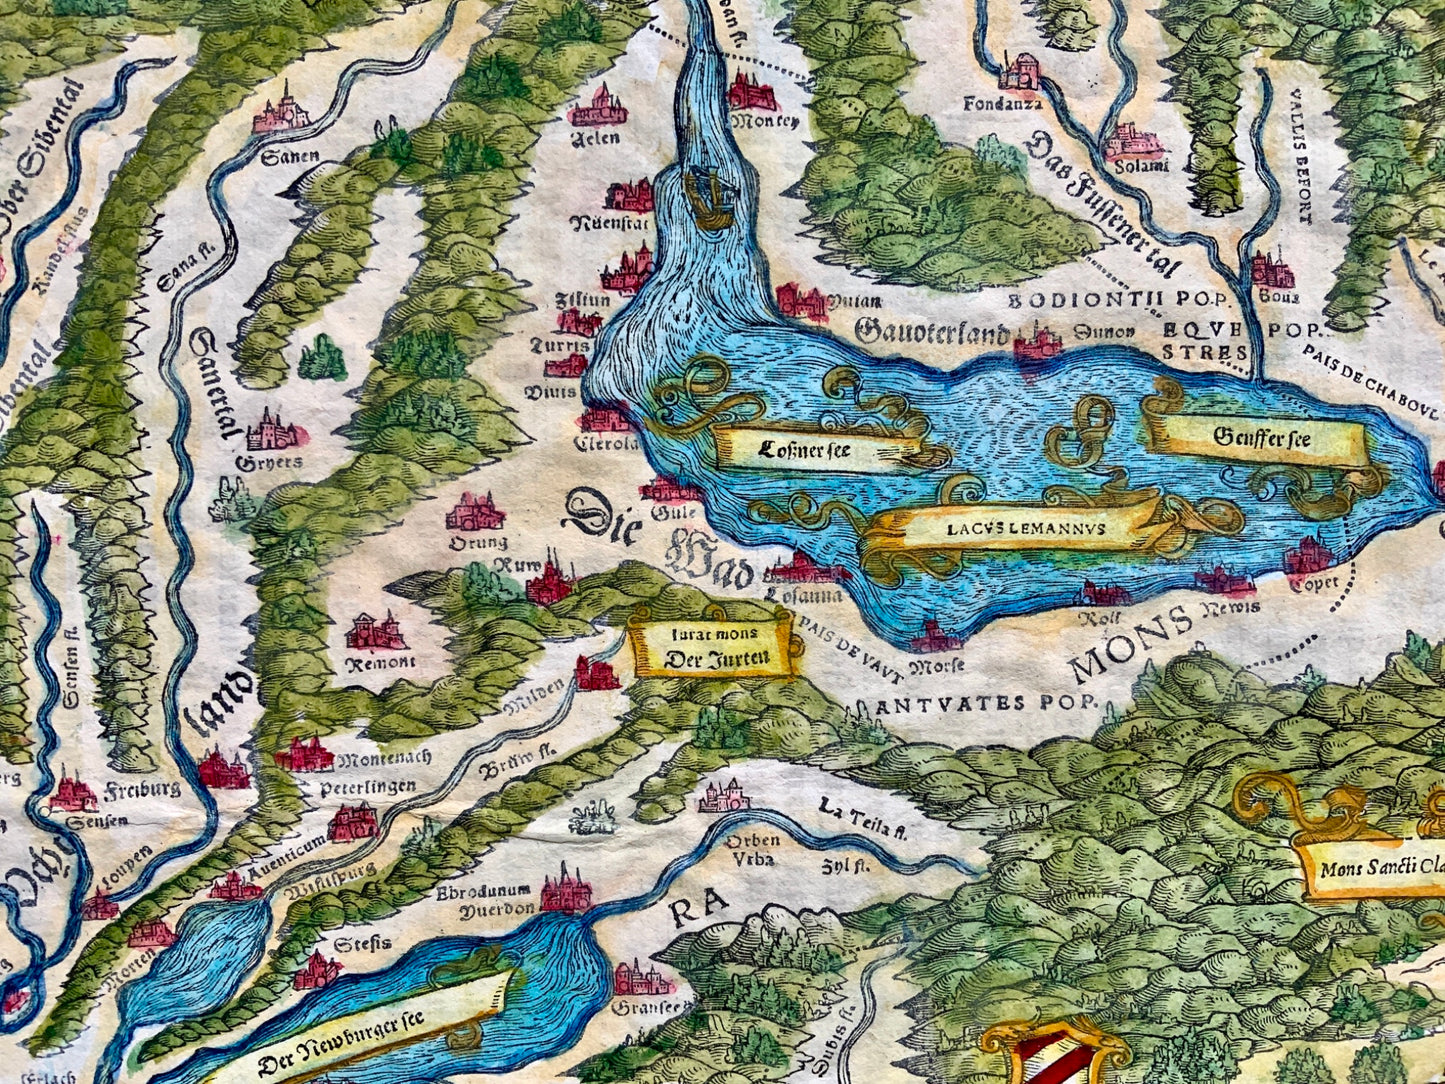 1548 Johannes Stumpf [1500-1577] Folio map Southern Switzerland Geneva